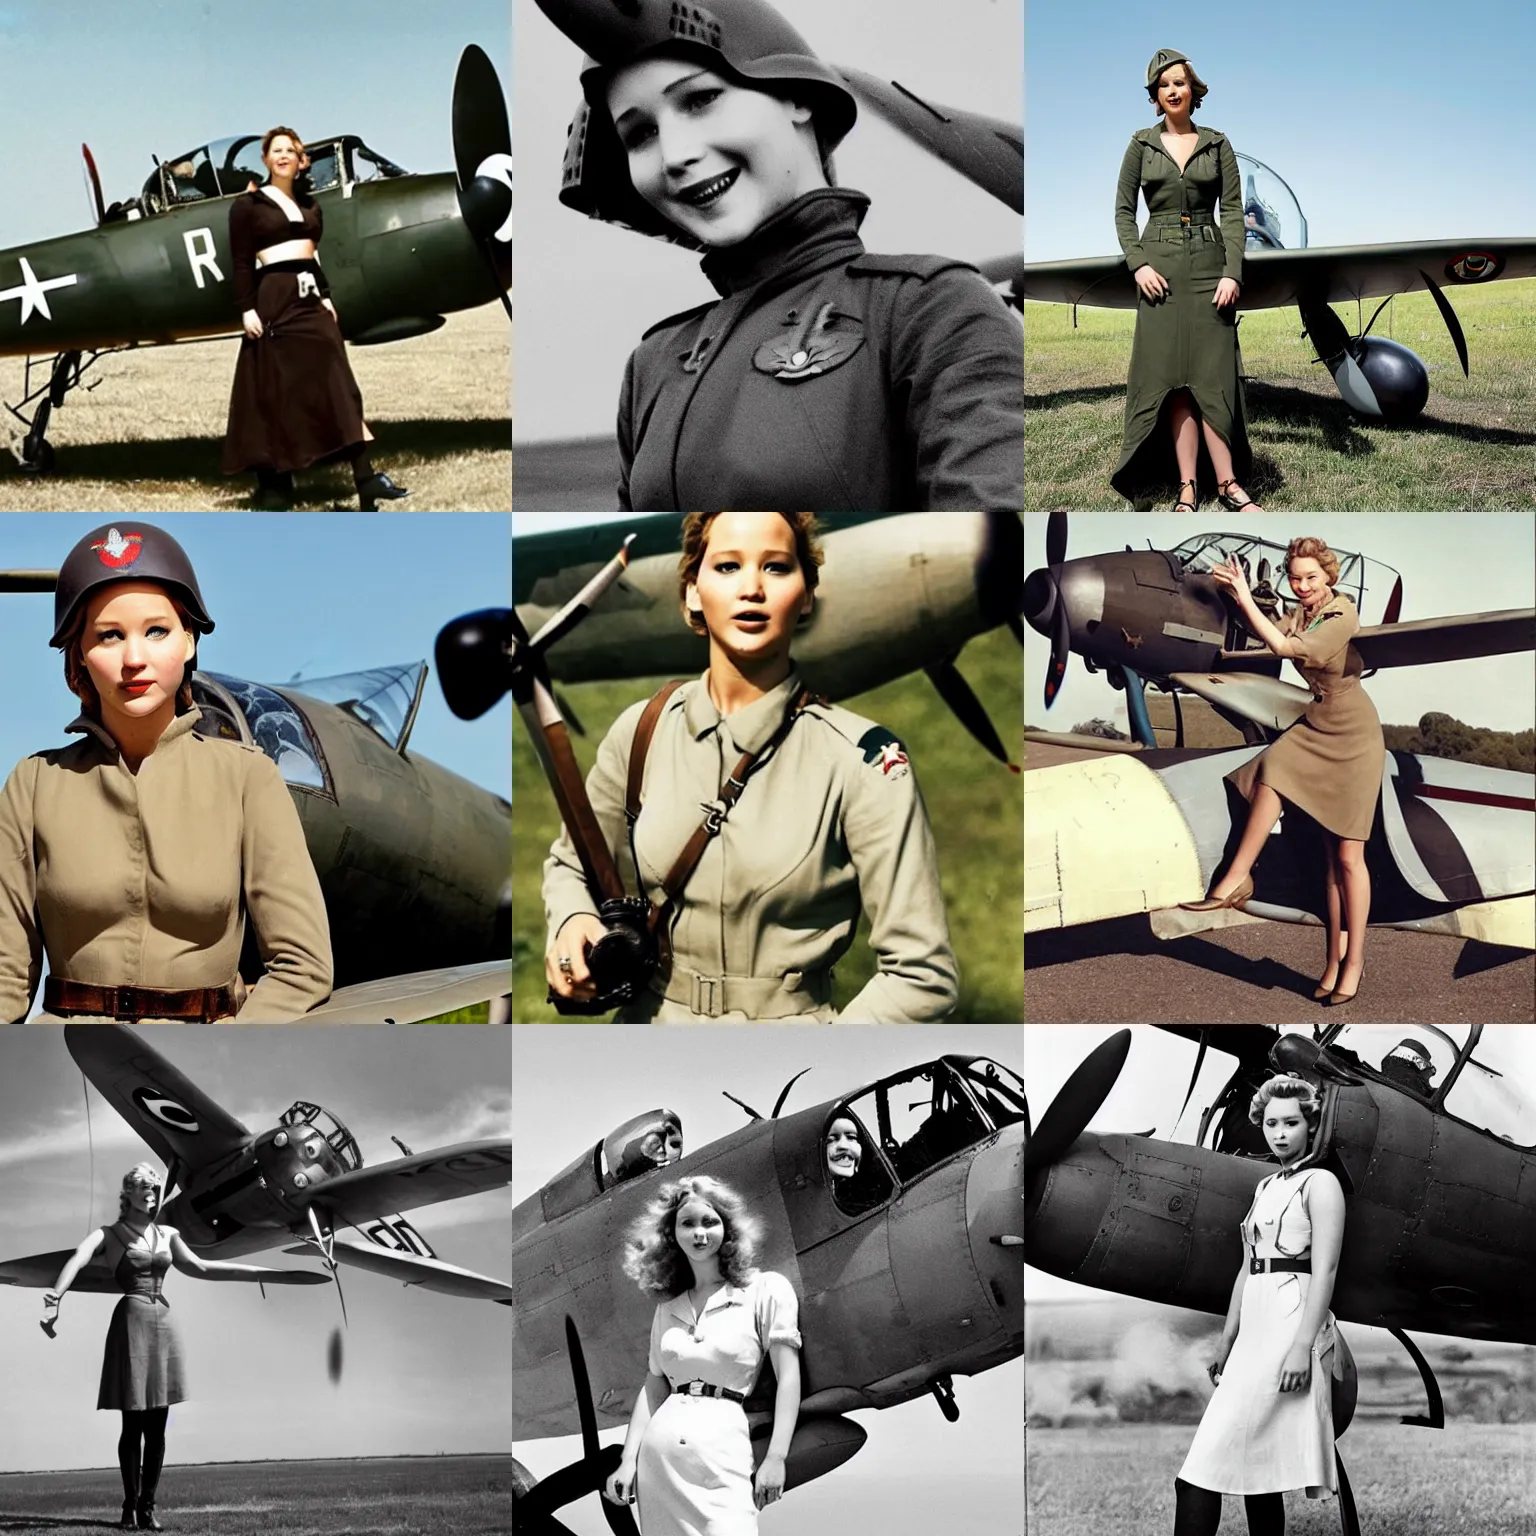 Prompt: Jennifer Lawrence as a WW2 Spitfire pilot, wearing a dress, posing next to her Spitfire plane